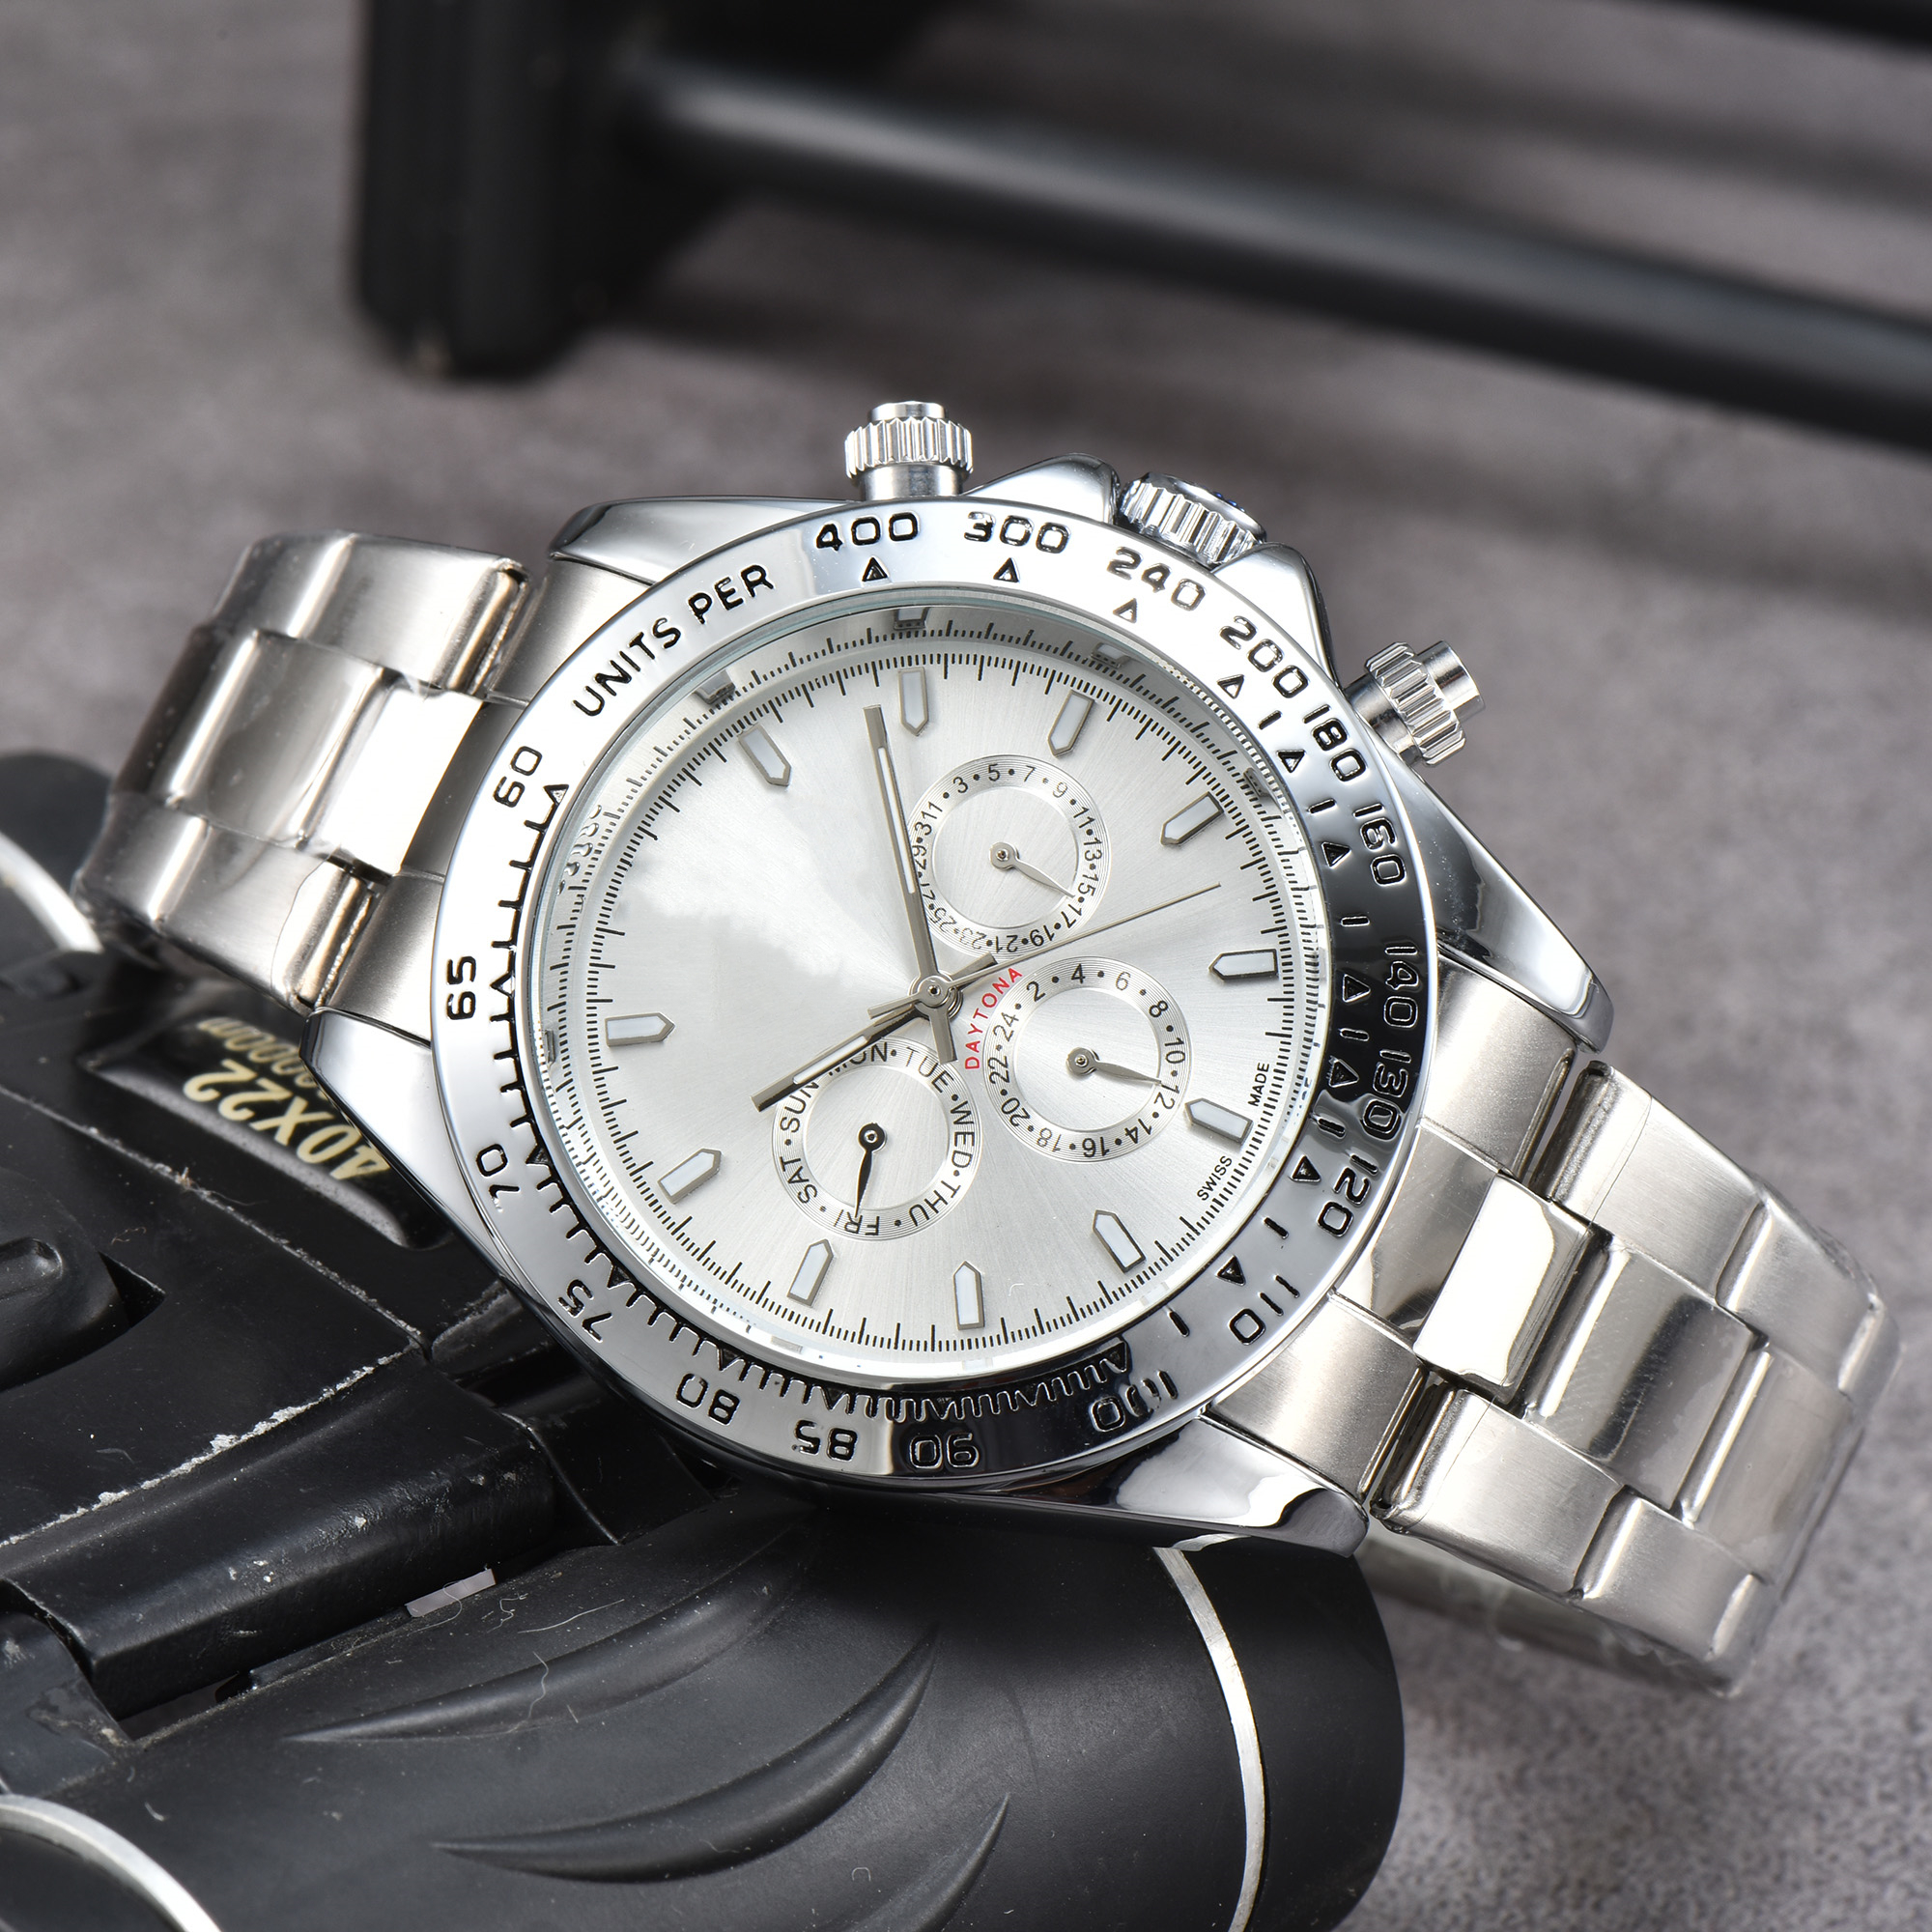 Watch Watch Luxury Men Fashion Classic Style Stafless Steel مقاوم للماء من الياقوت الميكانيكي الميكانيكي Dhgate Watch239V